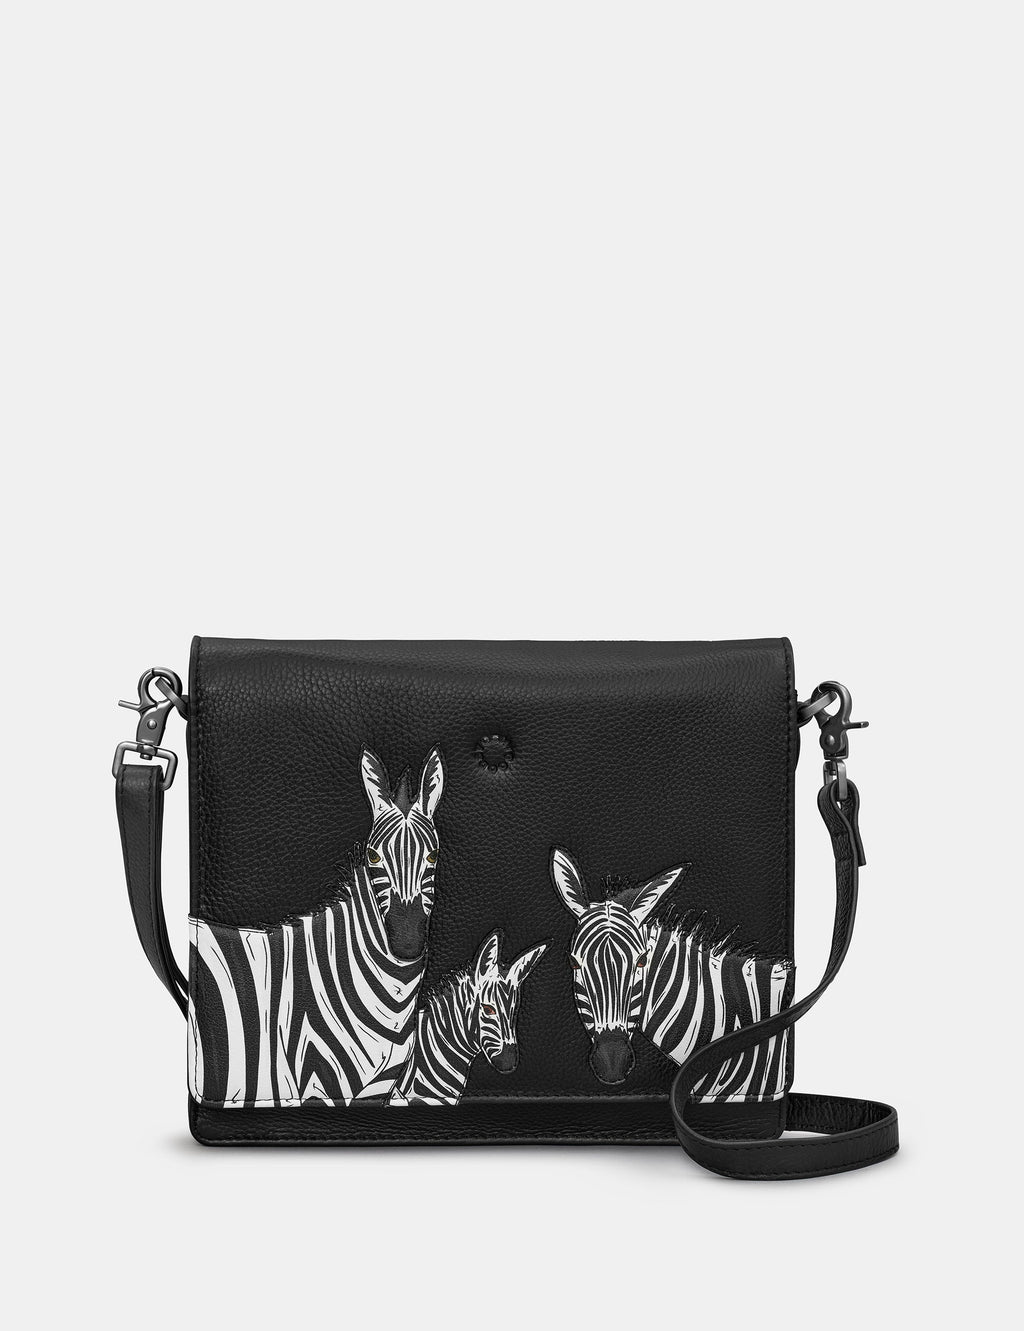 Yoshi - Black Zebra Leather Triple Gusset Flap Bag